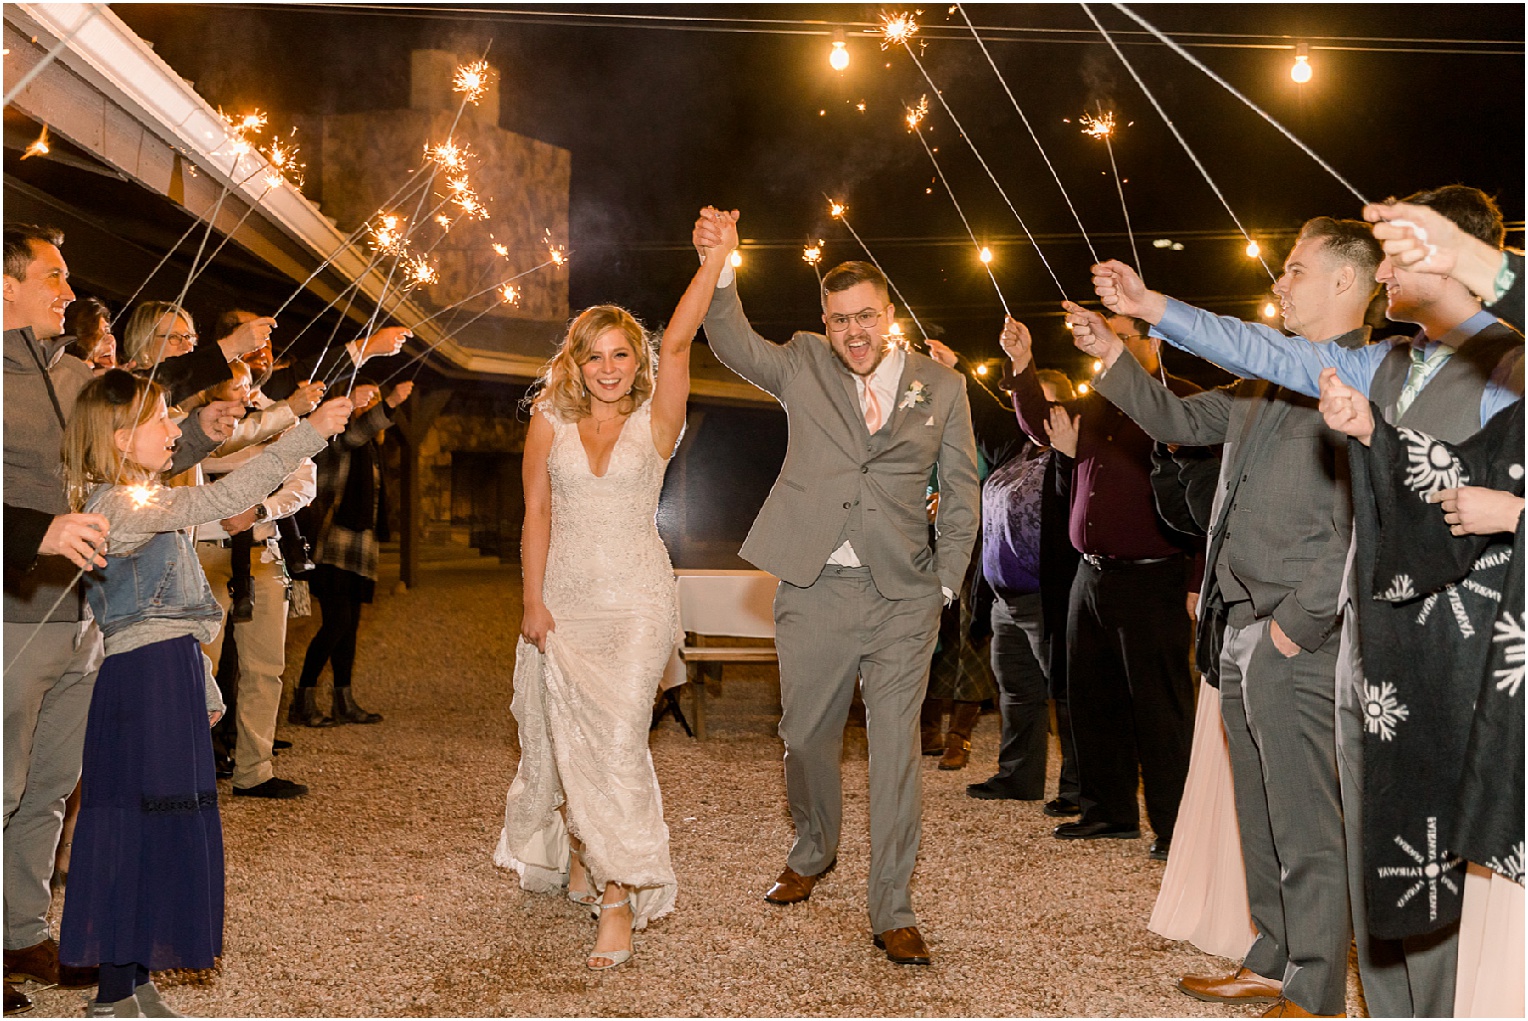 Annabelle + James Hilton El Conquistador Wedding reception sparkler exit